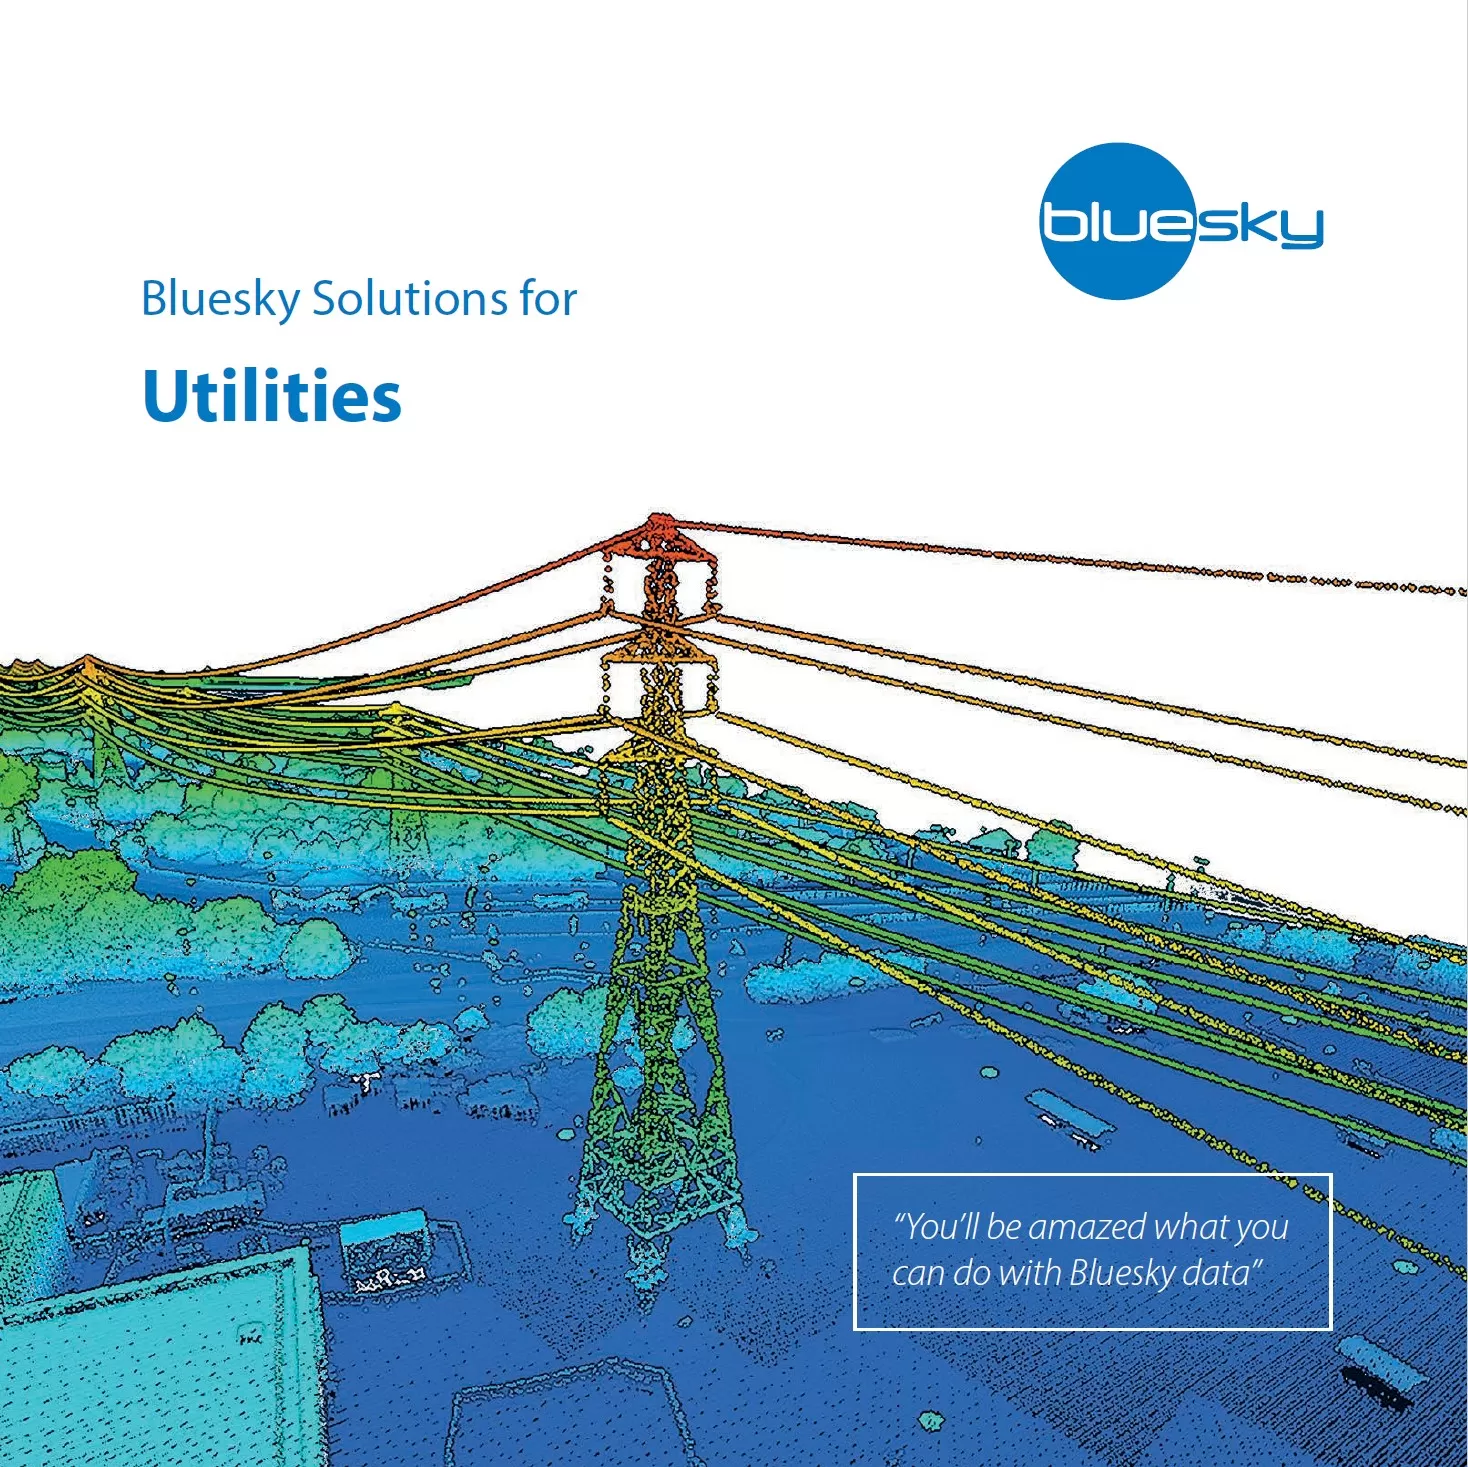 Thumbnail image of Bluesky's Utilities Brochure